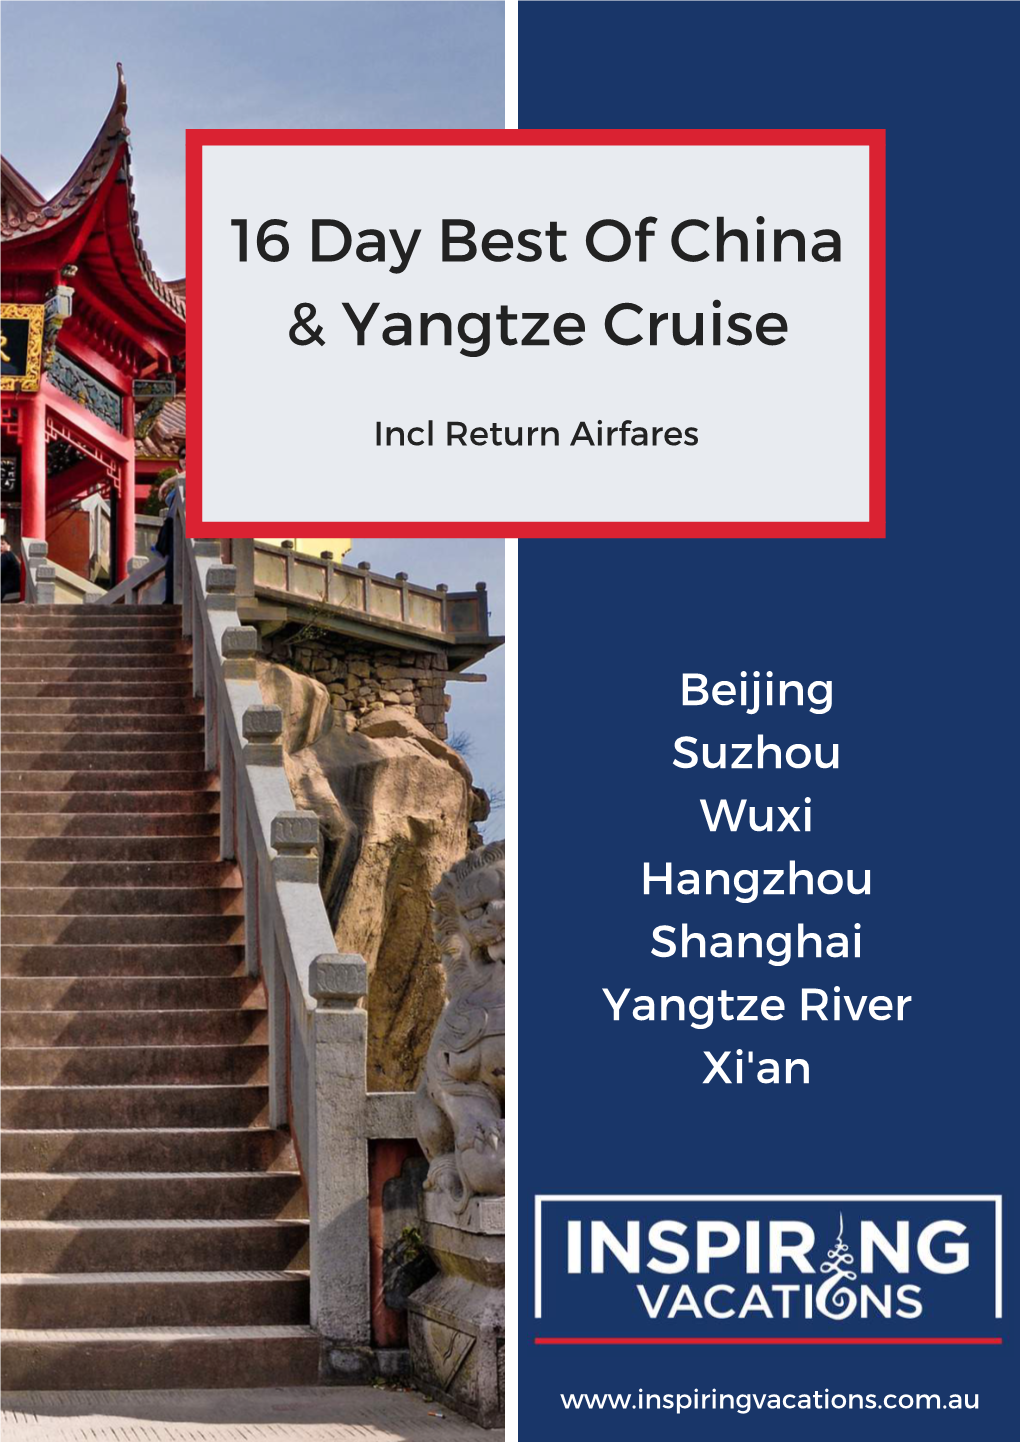 16 Day Best of China & Yangtze Cruise